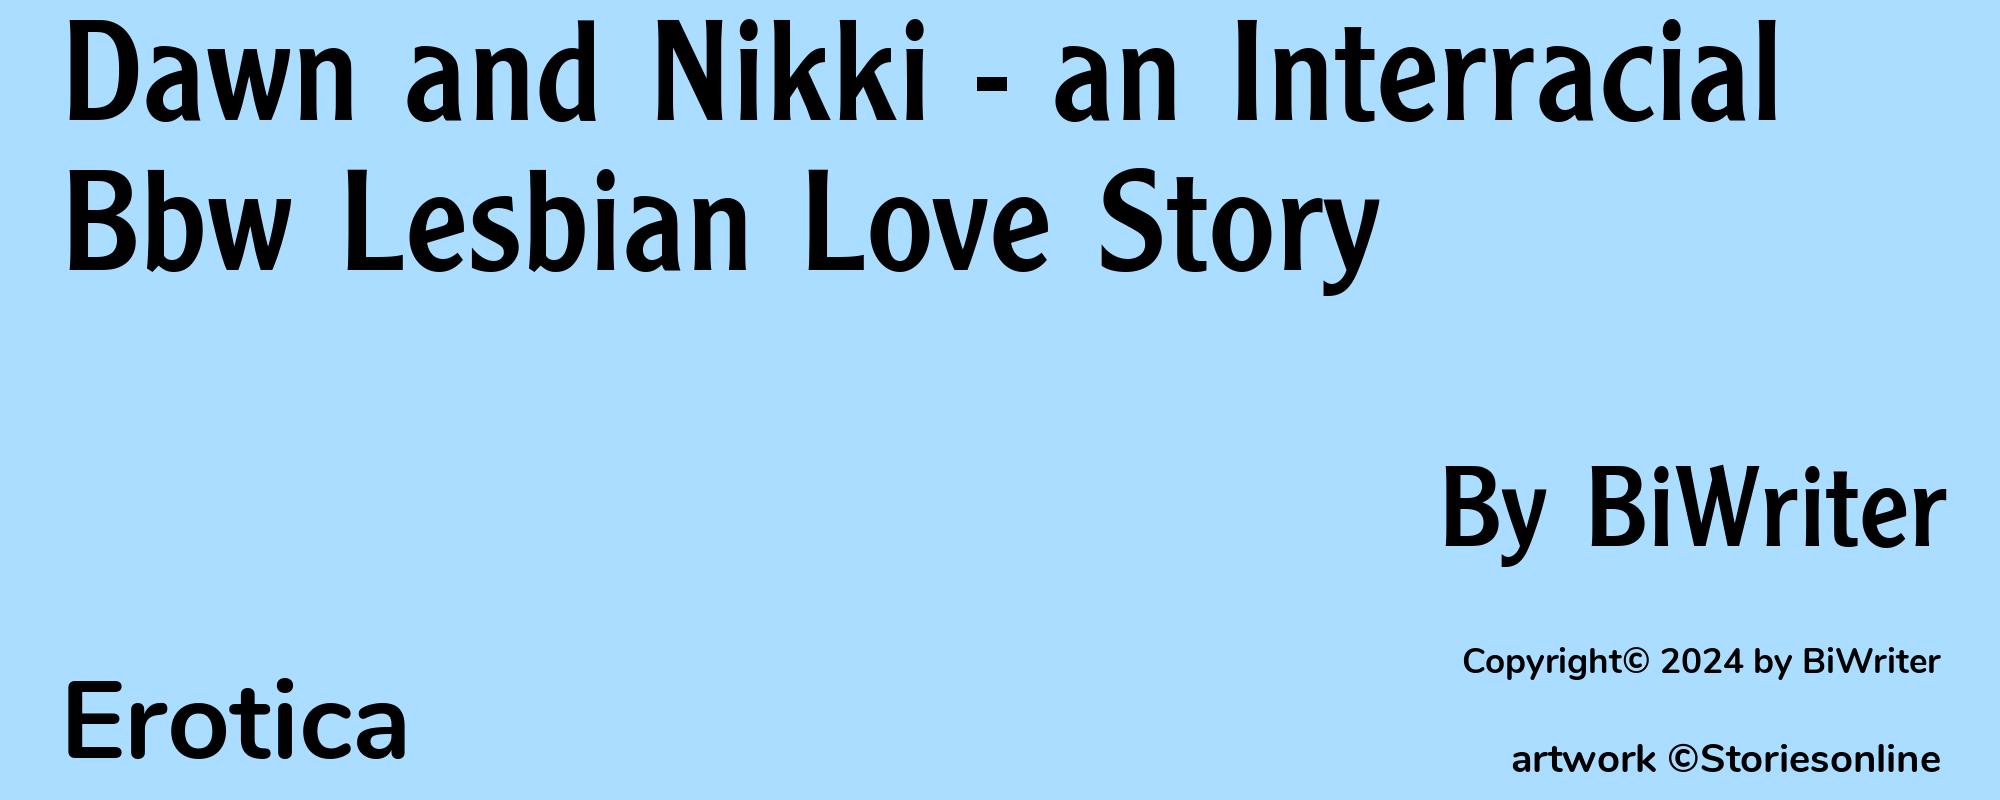 Dawn and Nikki - an Interracial Bbw Lesbian Love Story - Cover